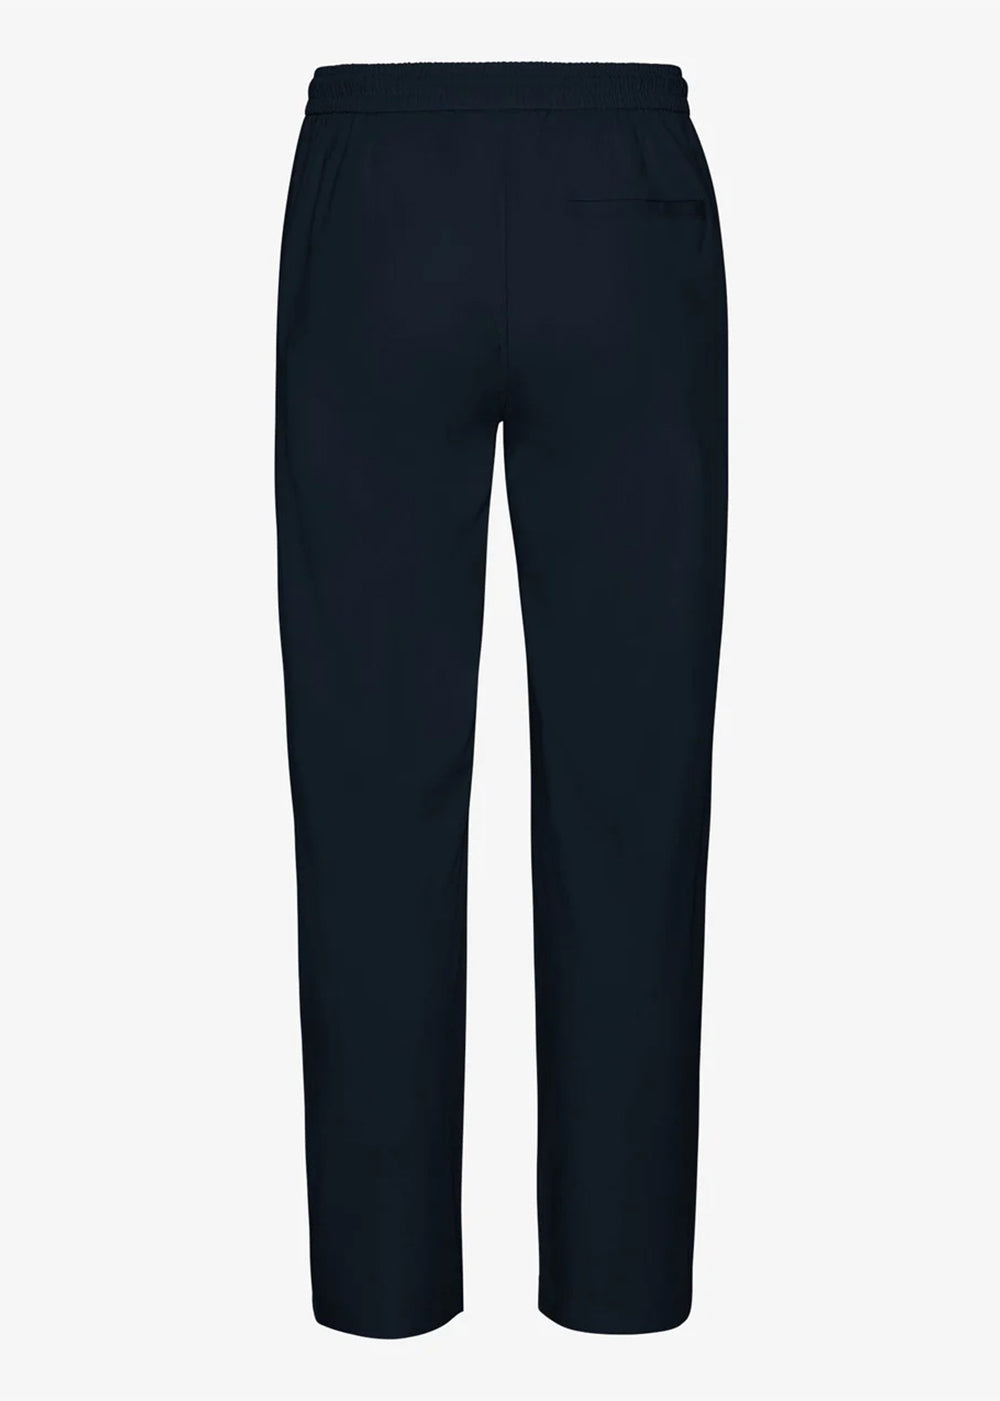 Organic Twill Pants - Navy Blue - Colorful Standard Canada - Danali